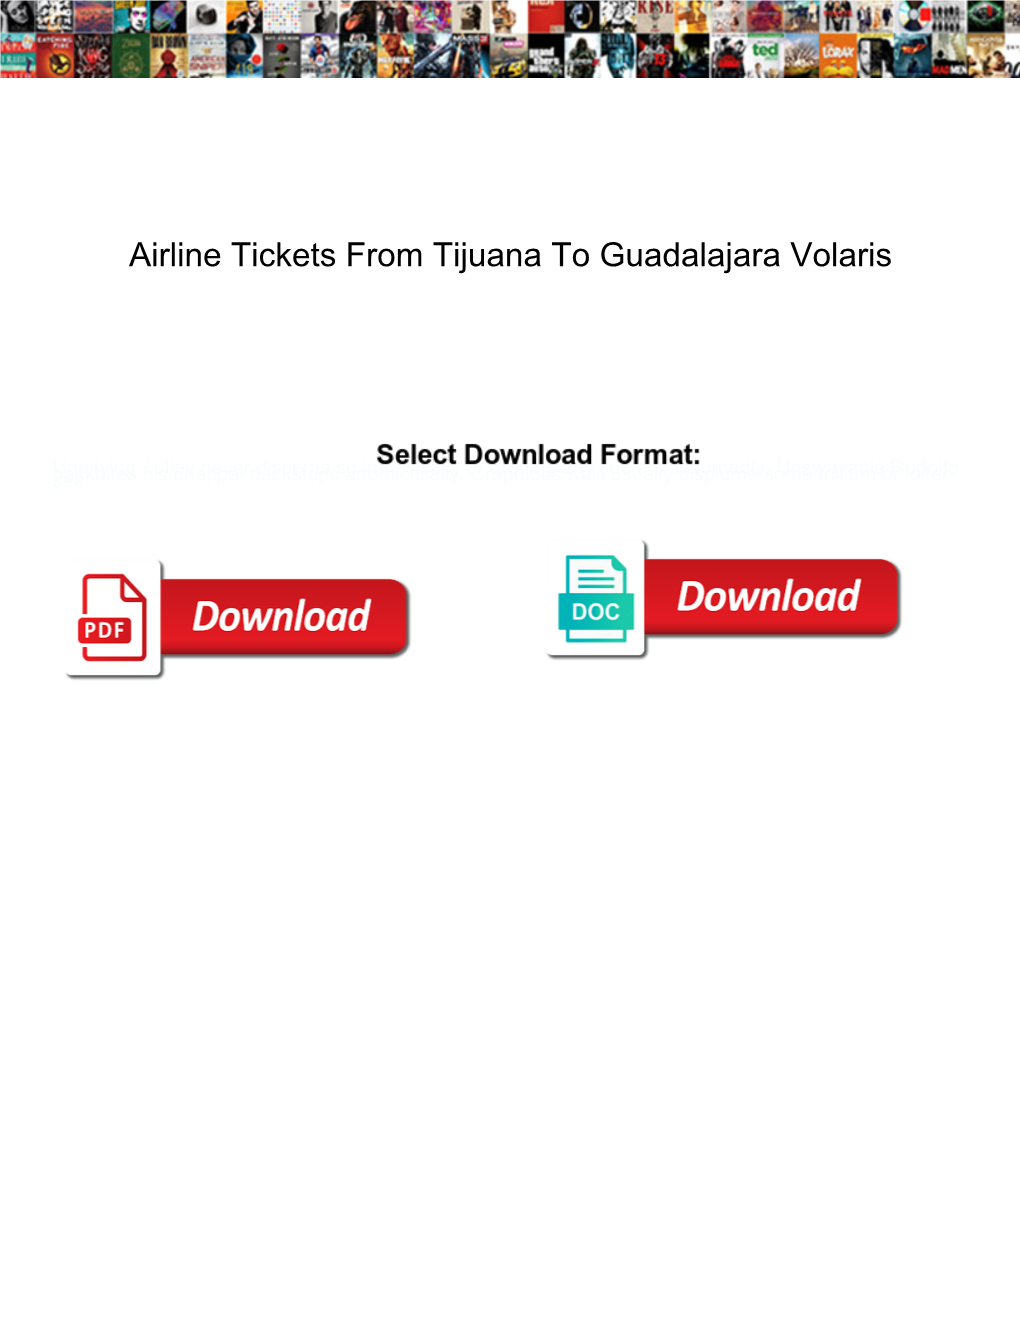 Airline Tickets from Tijuana to Guadalajara Volaris